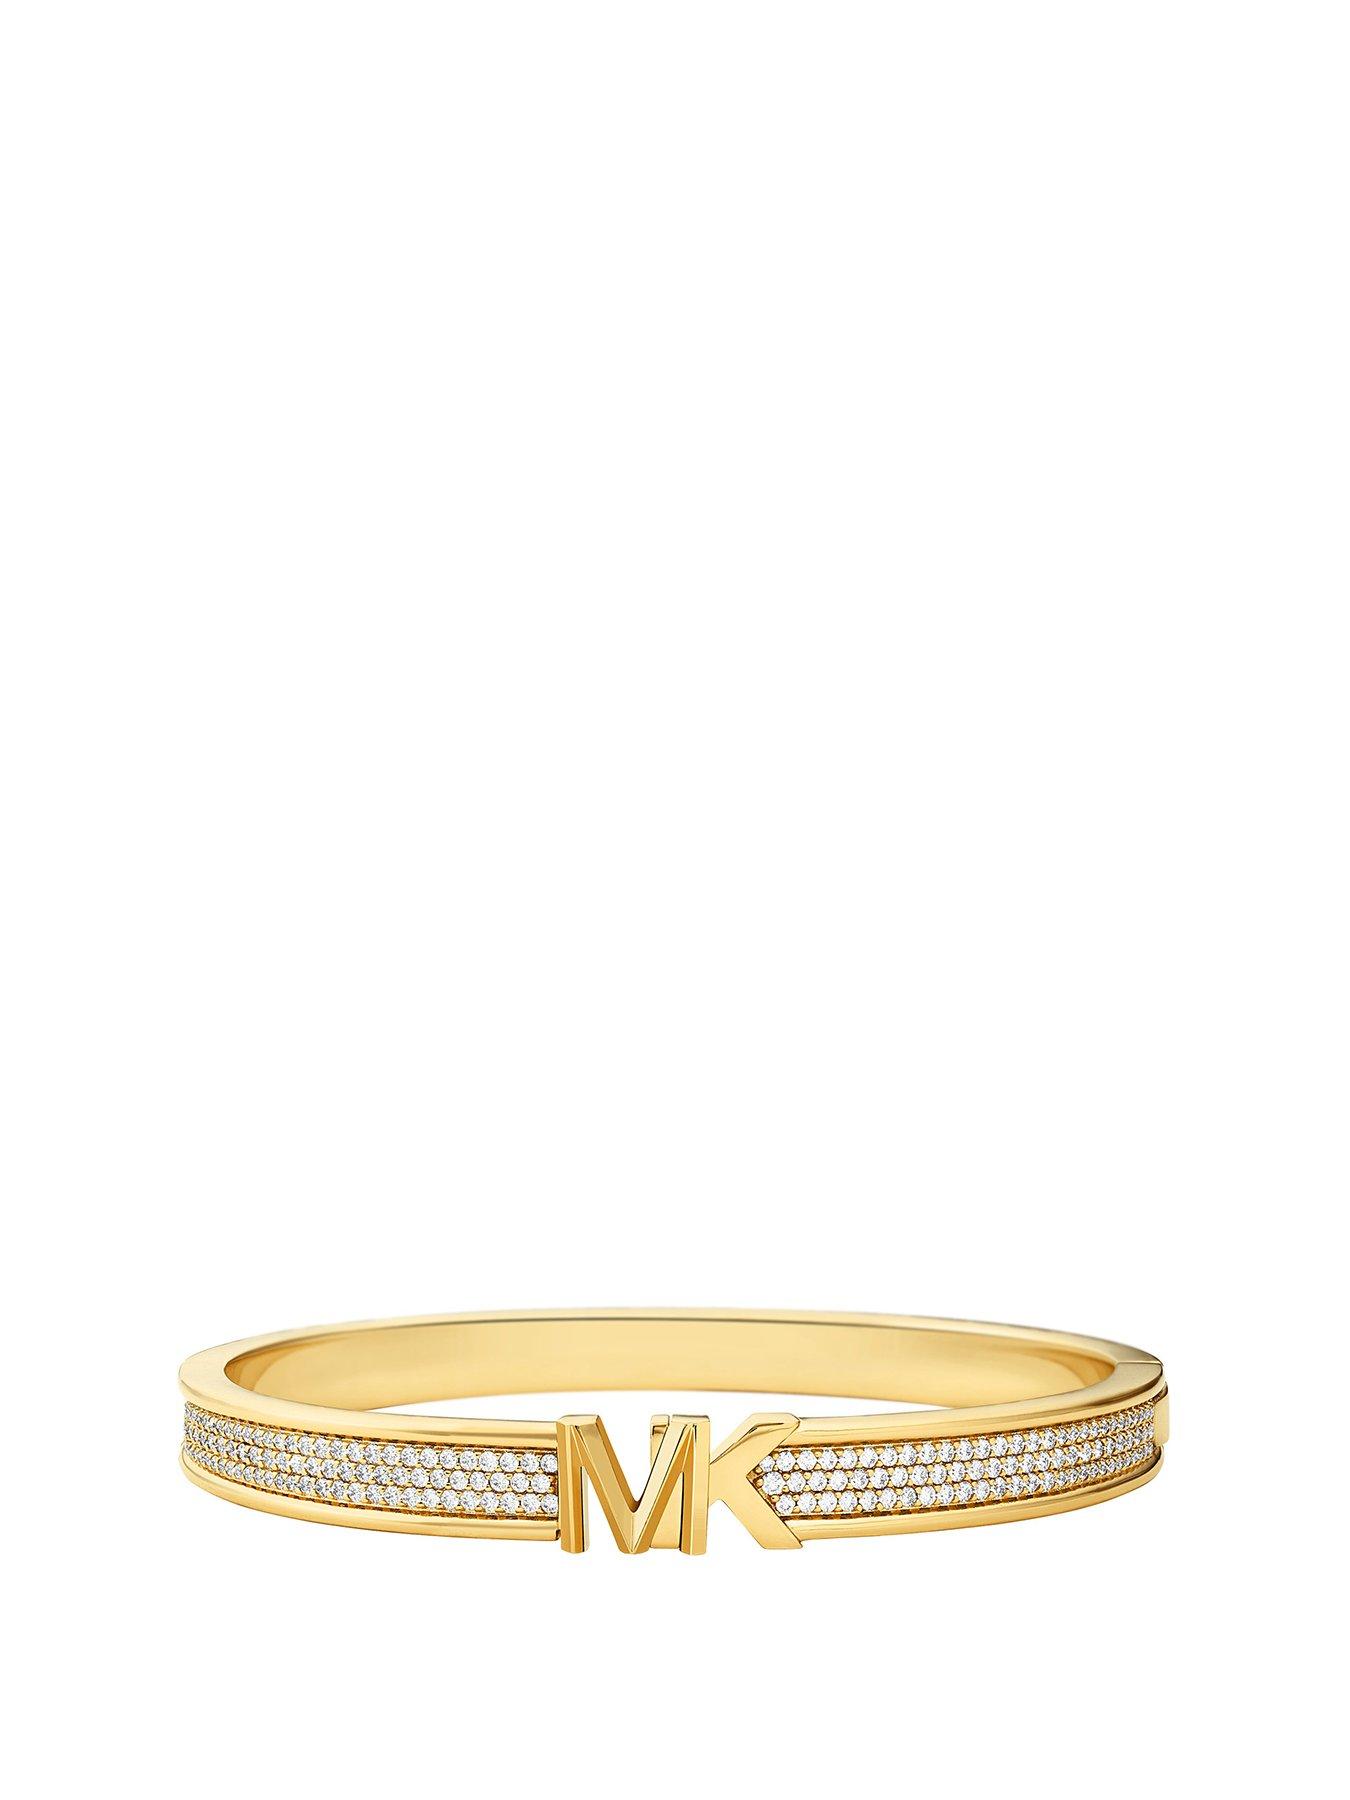 Bracelets | Gifts & jewellery | Michael kors 